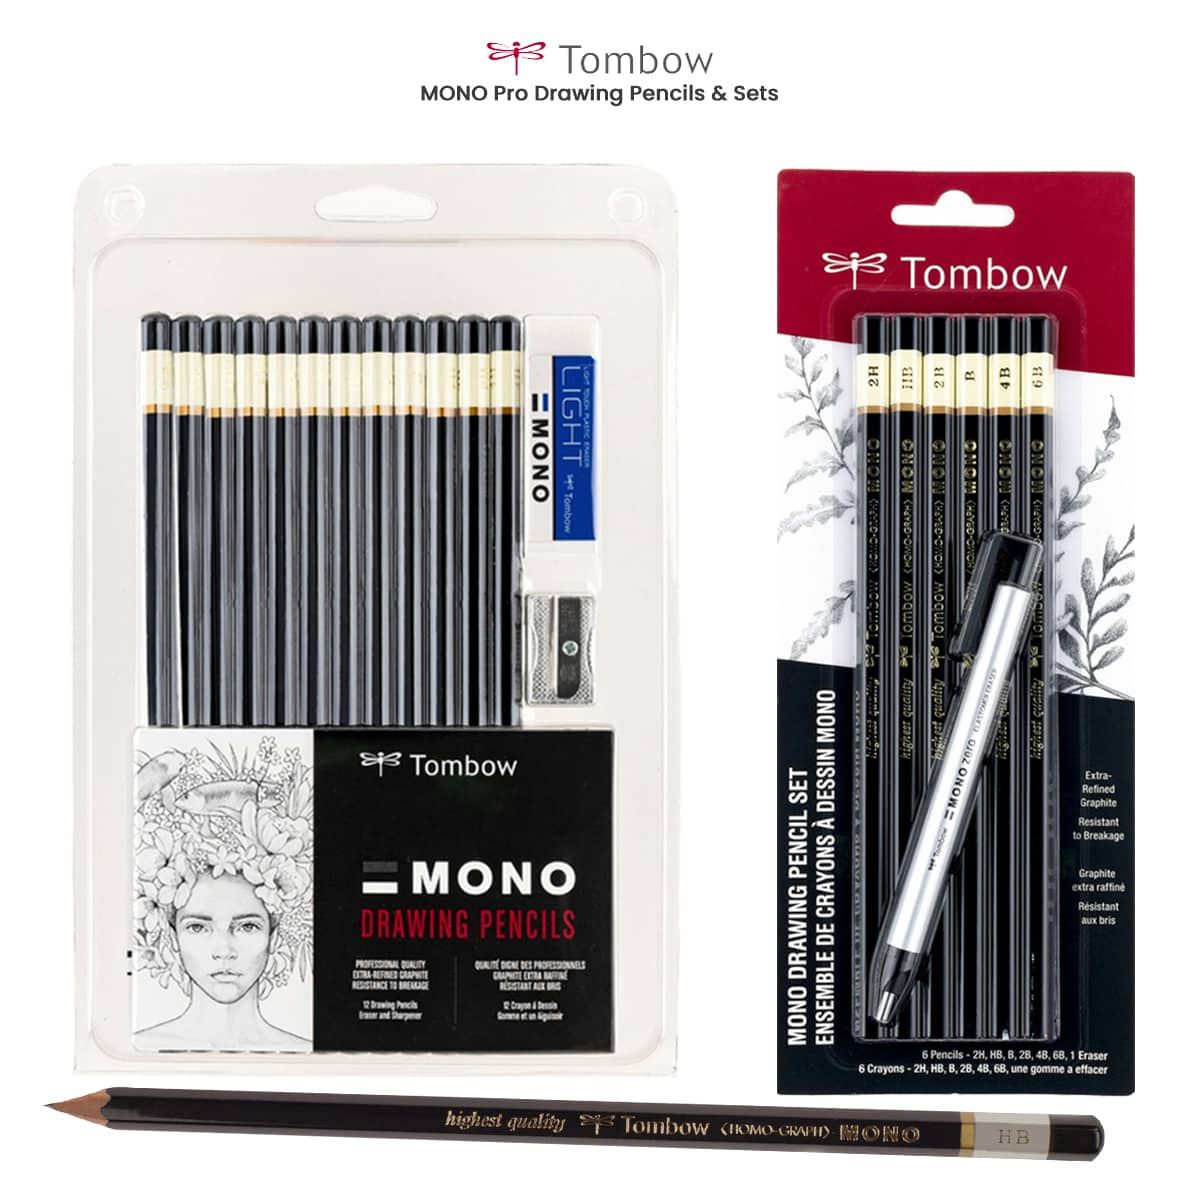 48 Graphite Drawing Sketching Pencils 2B Artist Premium Wood Pencil Un-sharpened